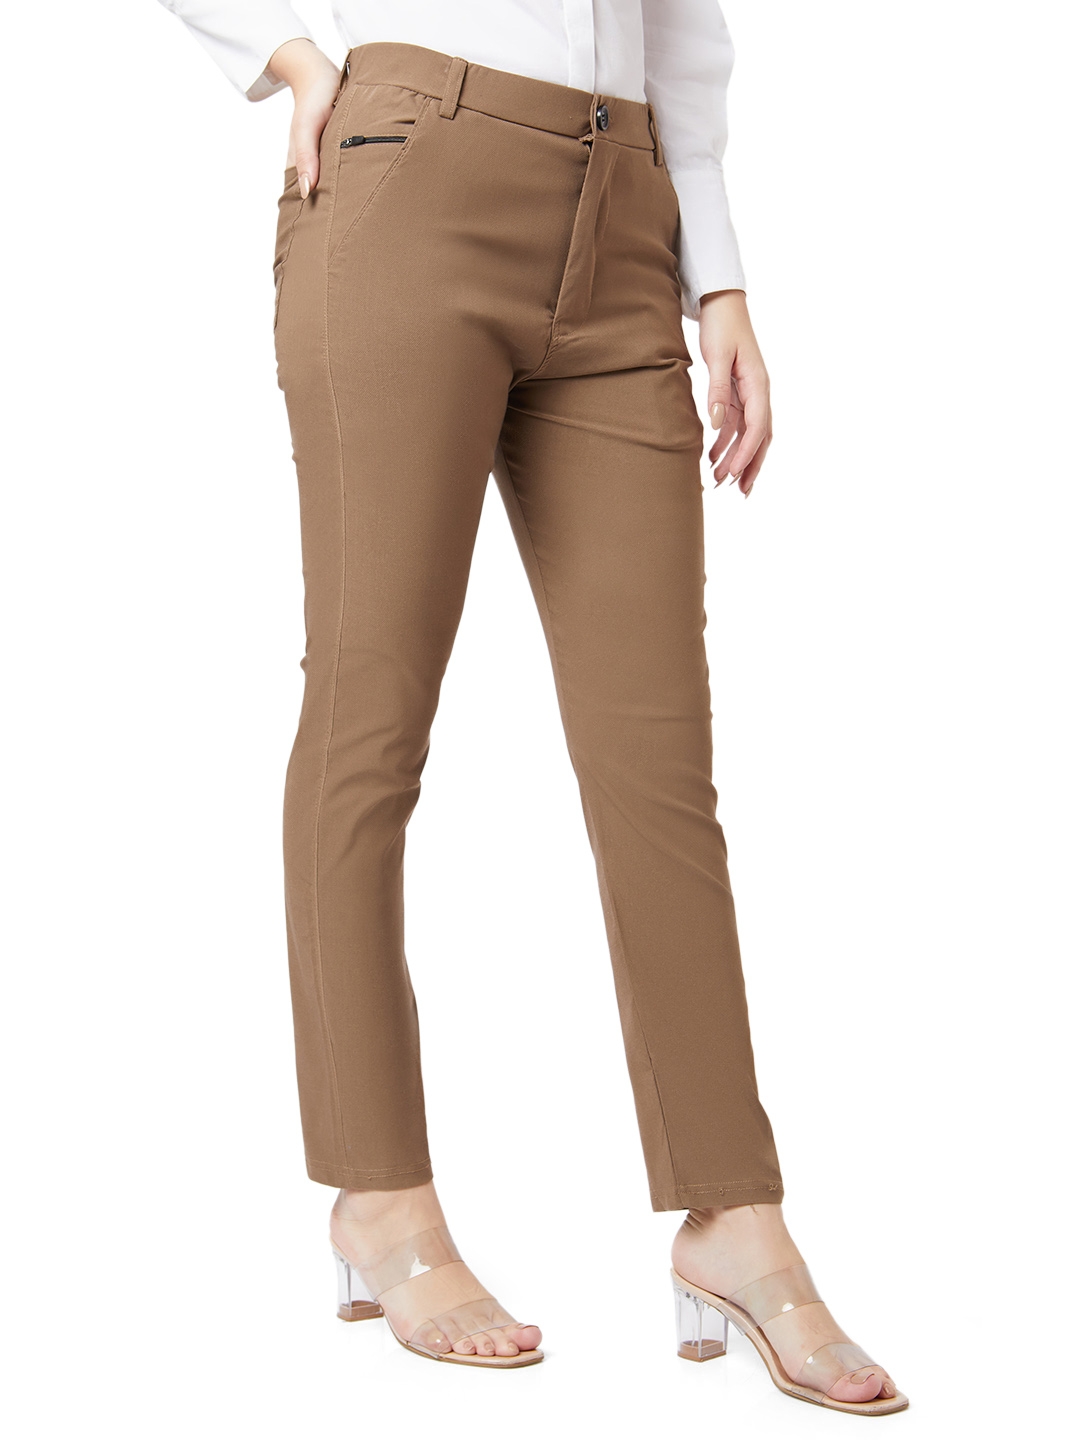 Smarty Pants women's cotton lycra ankle length brown color formal